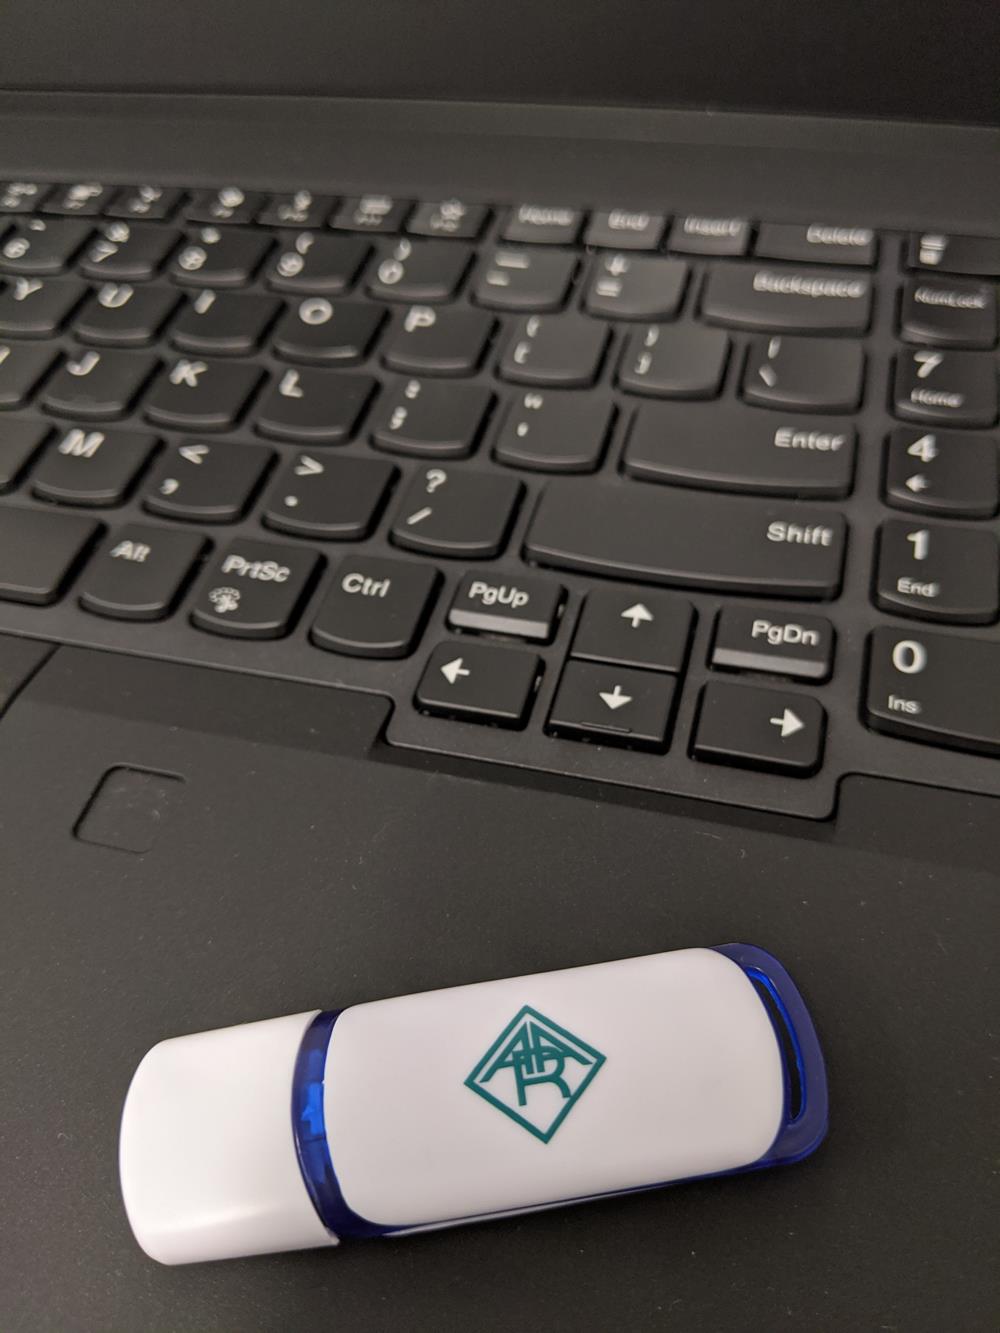 a usb flash drive on a laptop keyboard